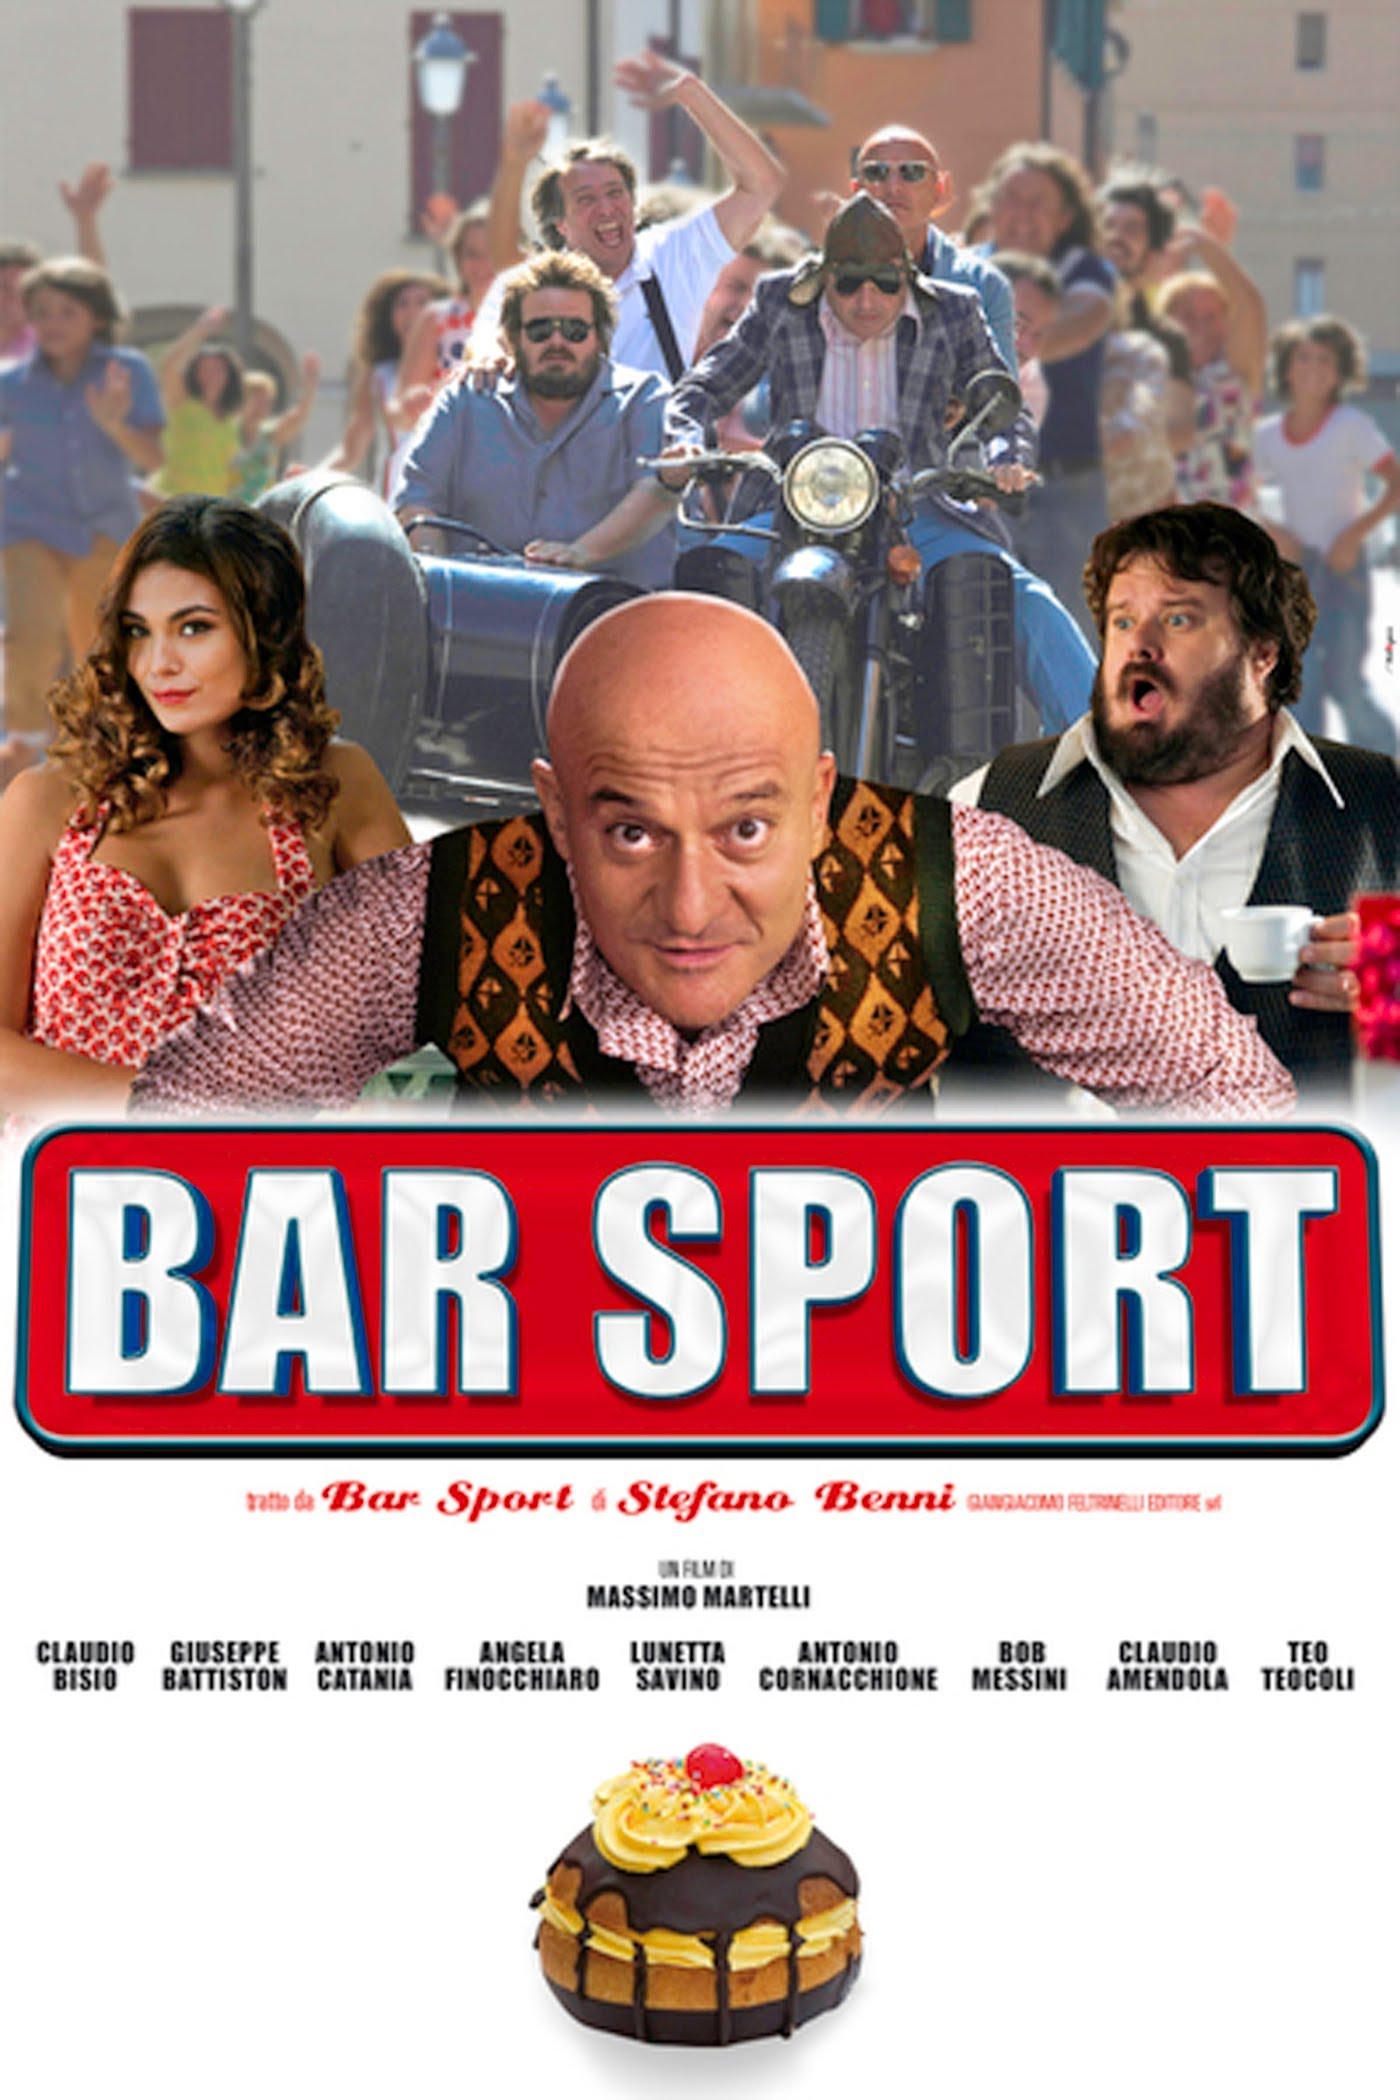 Bar Sport [HD] (2011)